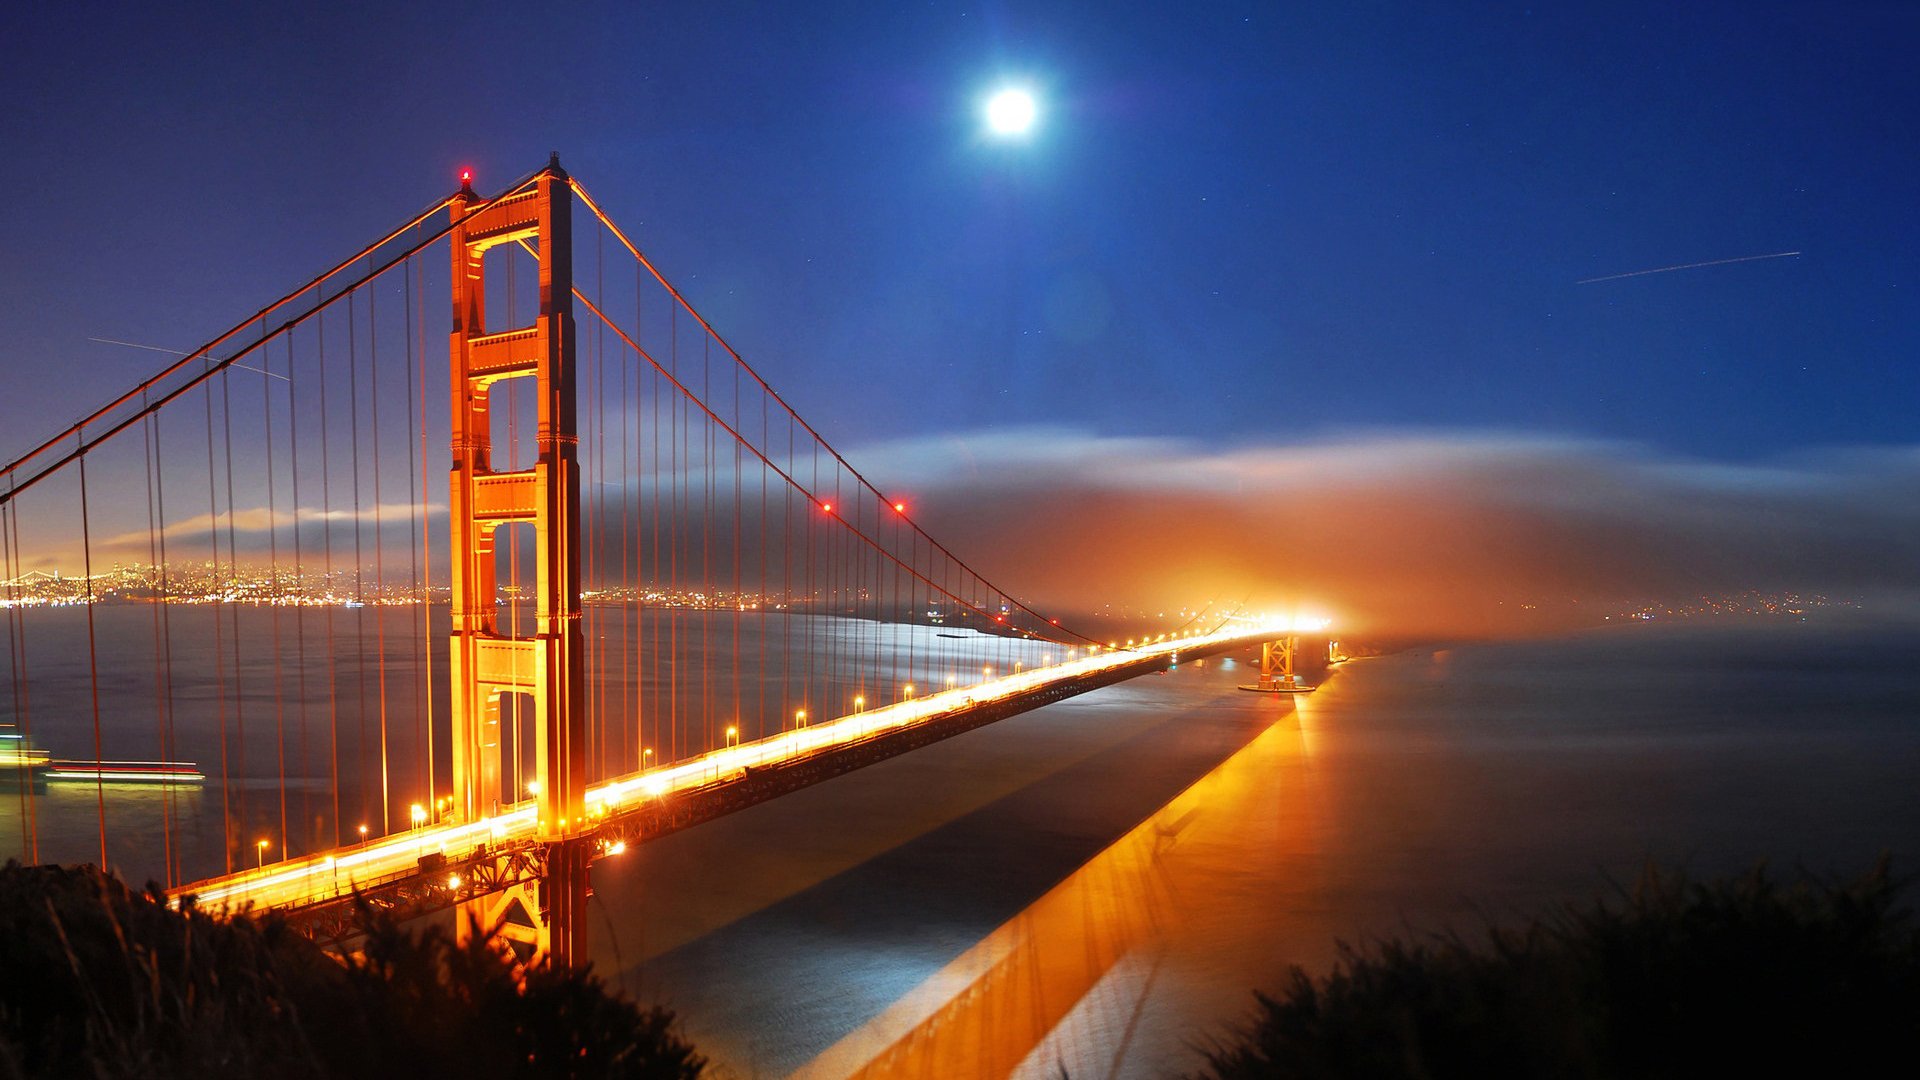 Desktop Wallpapers San Francisco's Golden Gate Bridge In Night, Hd Image, Picture, Background, Braxw7